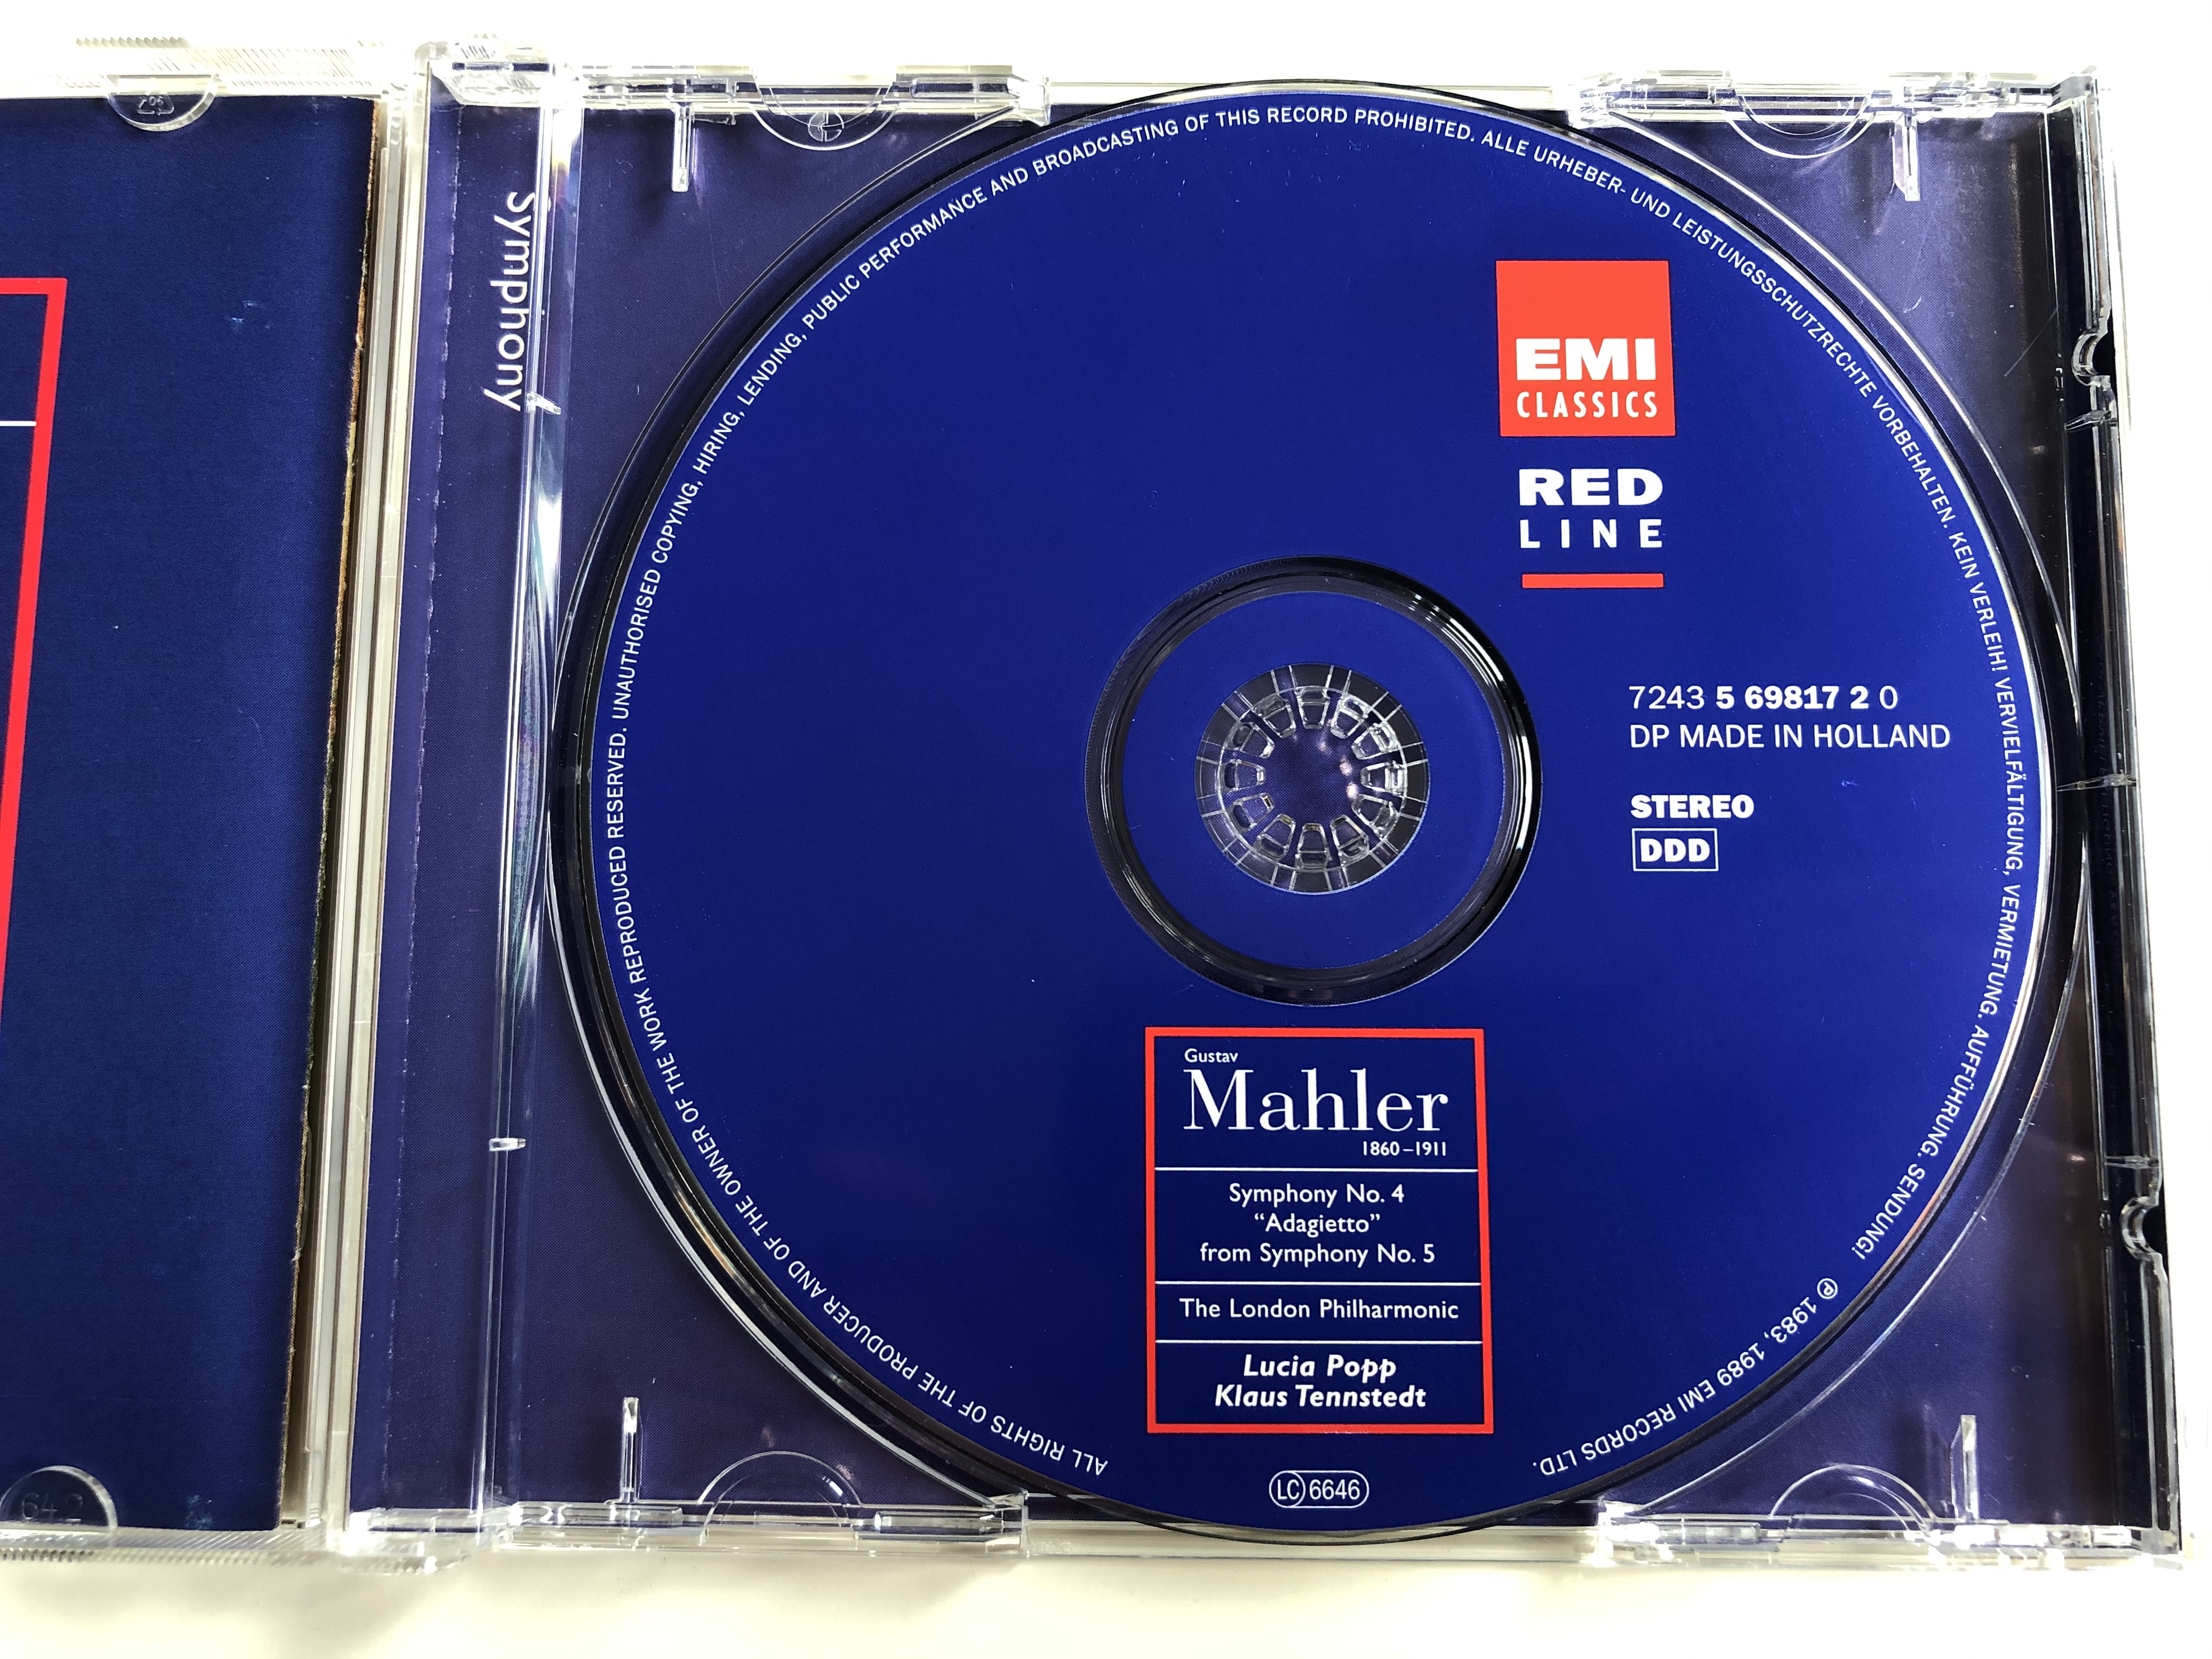 gustav-mahler-symphony-no.-4-adagietto-from-symphony-no.-5-the-london-philharmonic-lucia-popp-klaus-tennstedt-emi-classics-audio-cd-1997-stereo-7243-5-69817-2-0-6-.jpg